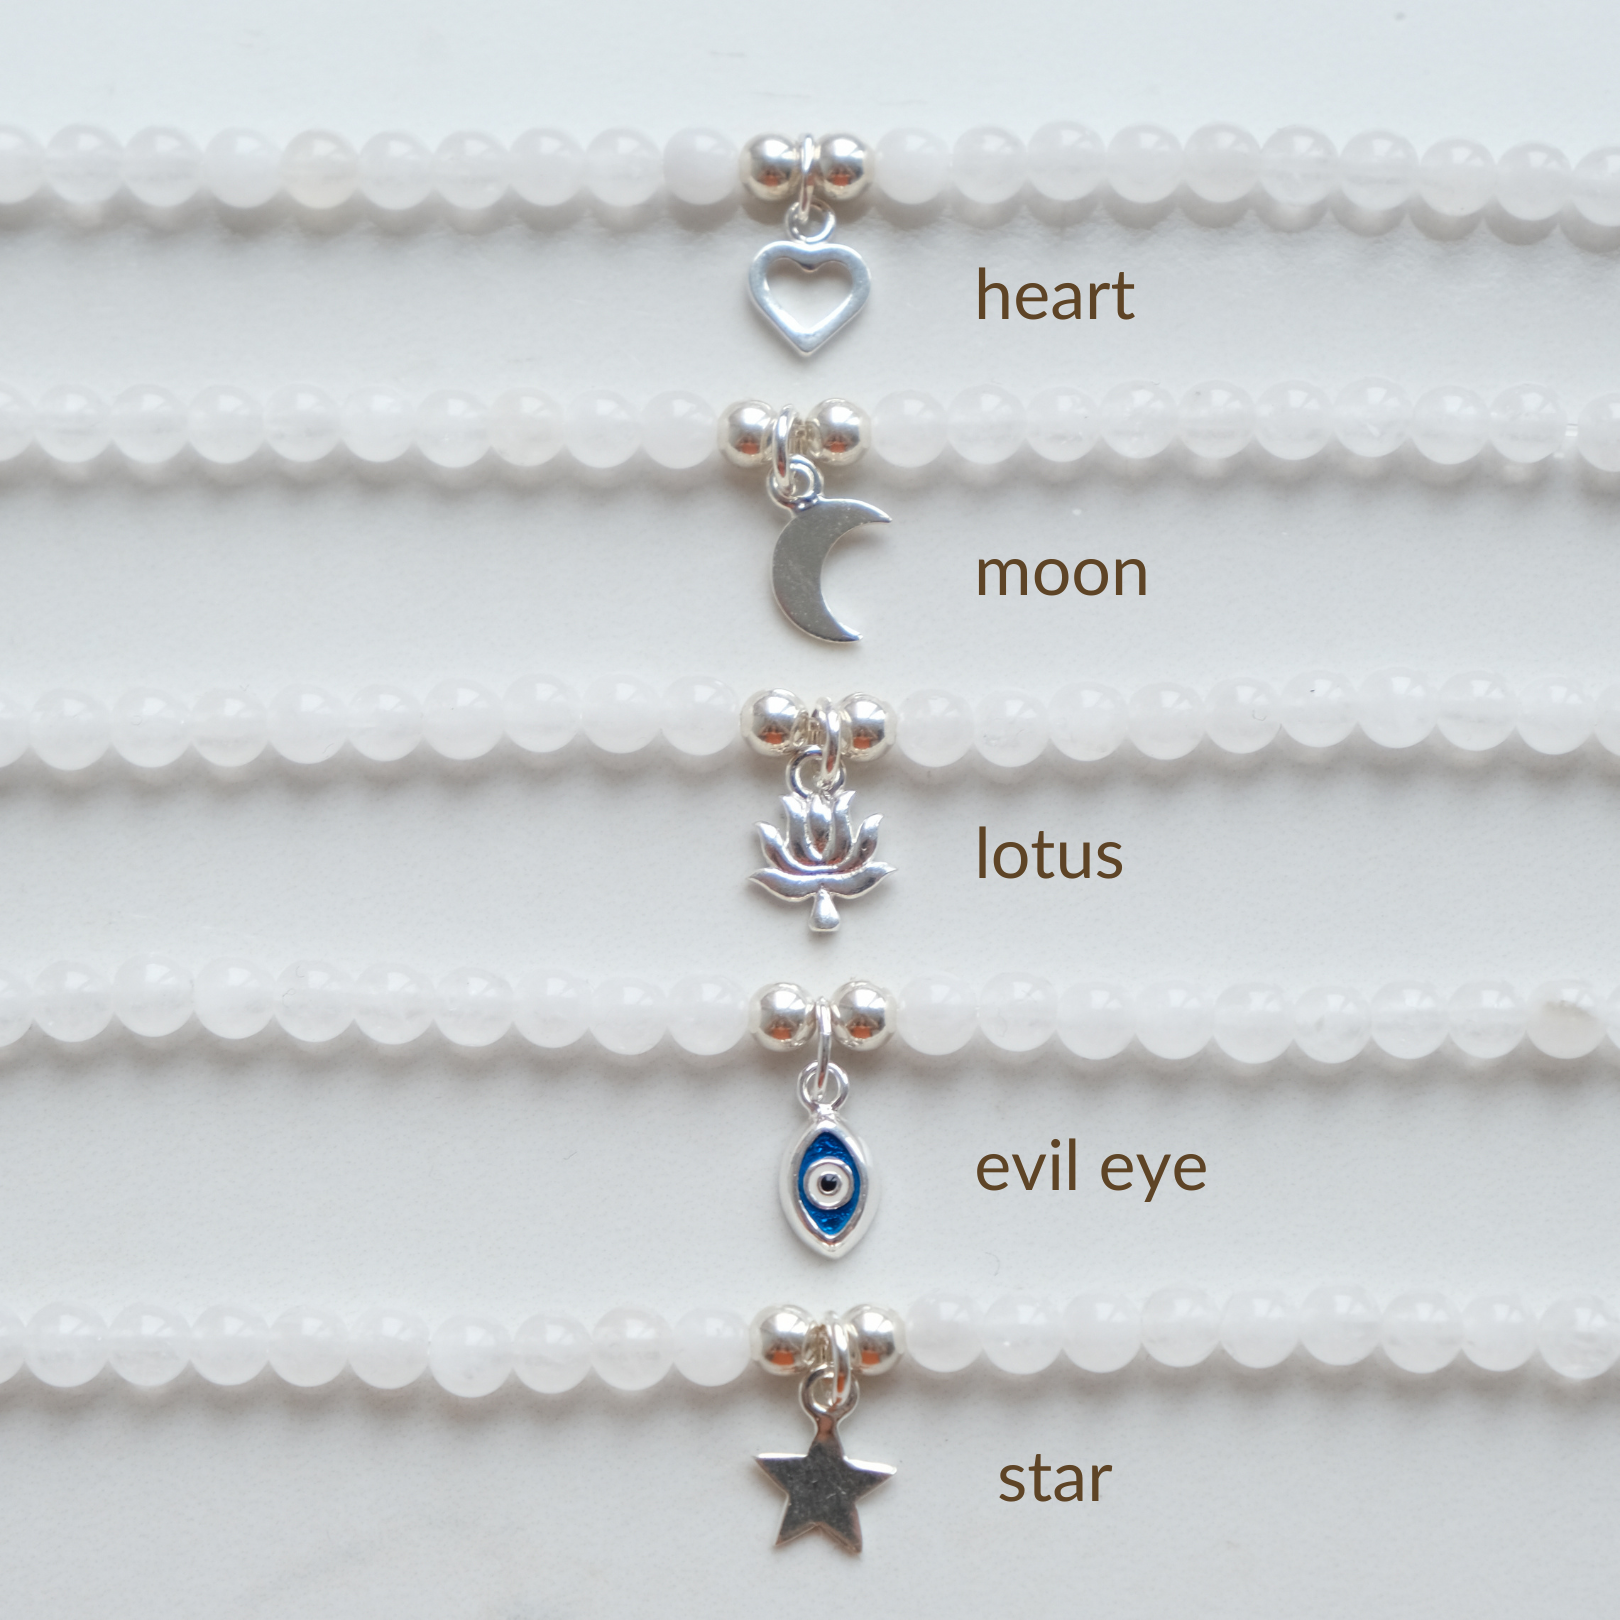 Silver charms: Heart, moon, lotus, evil eye, star